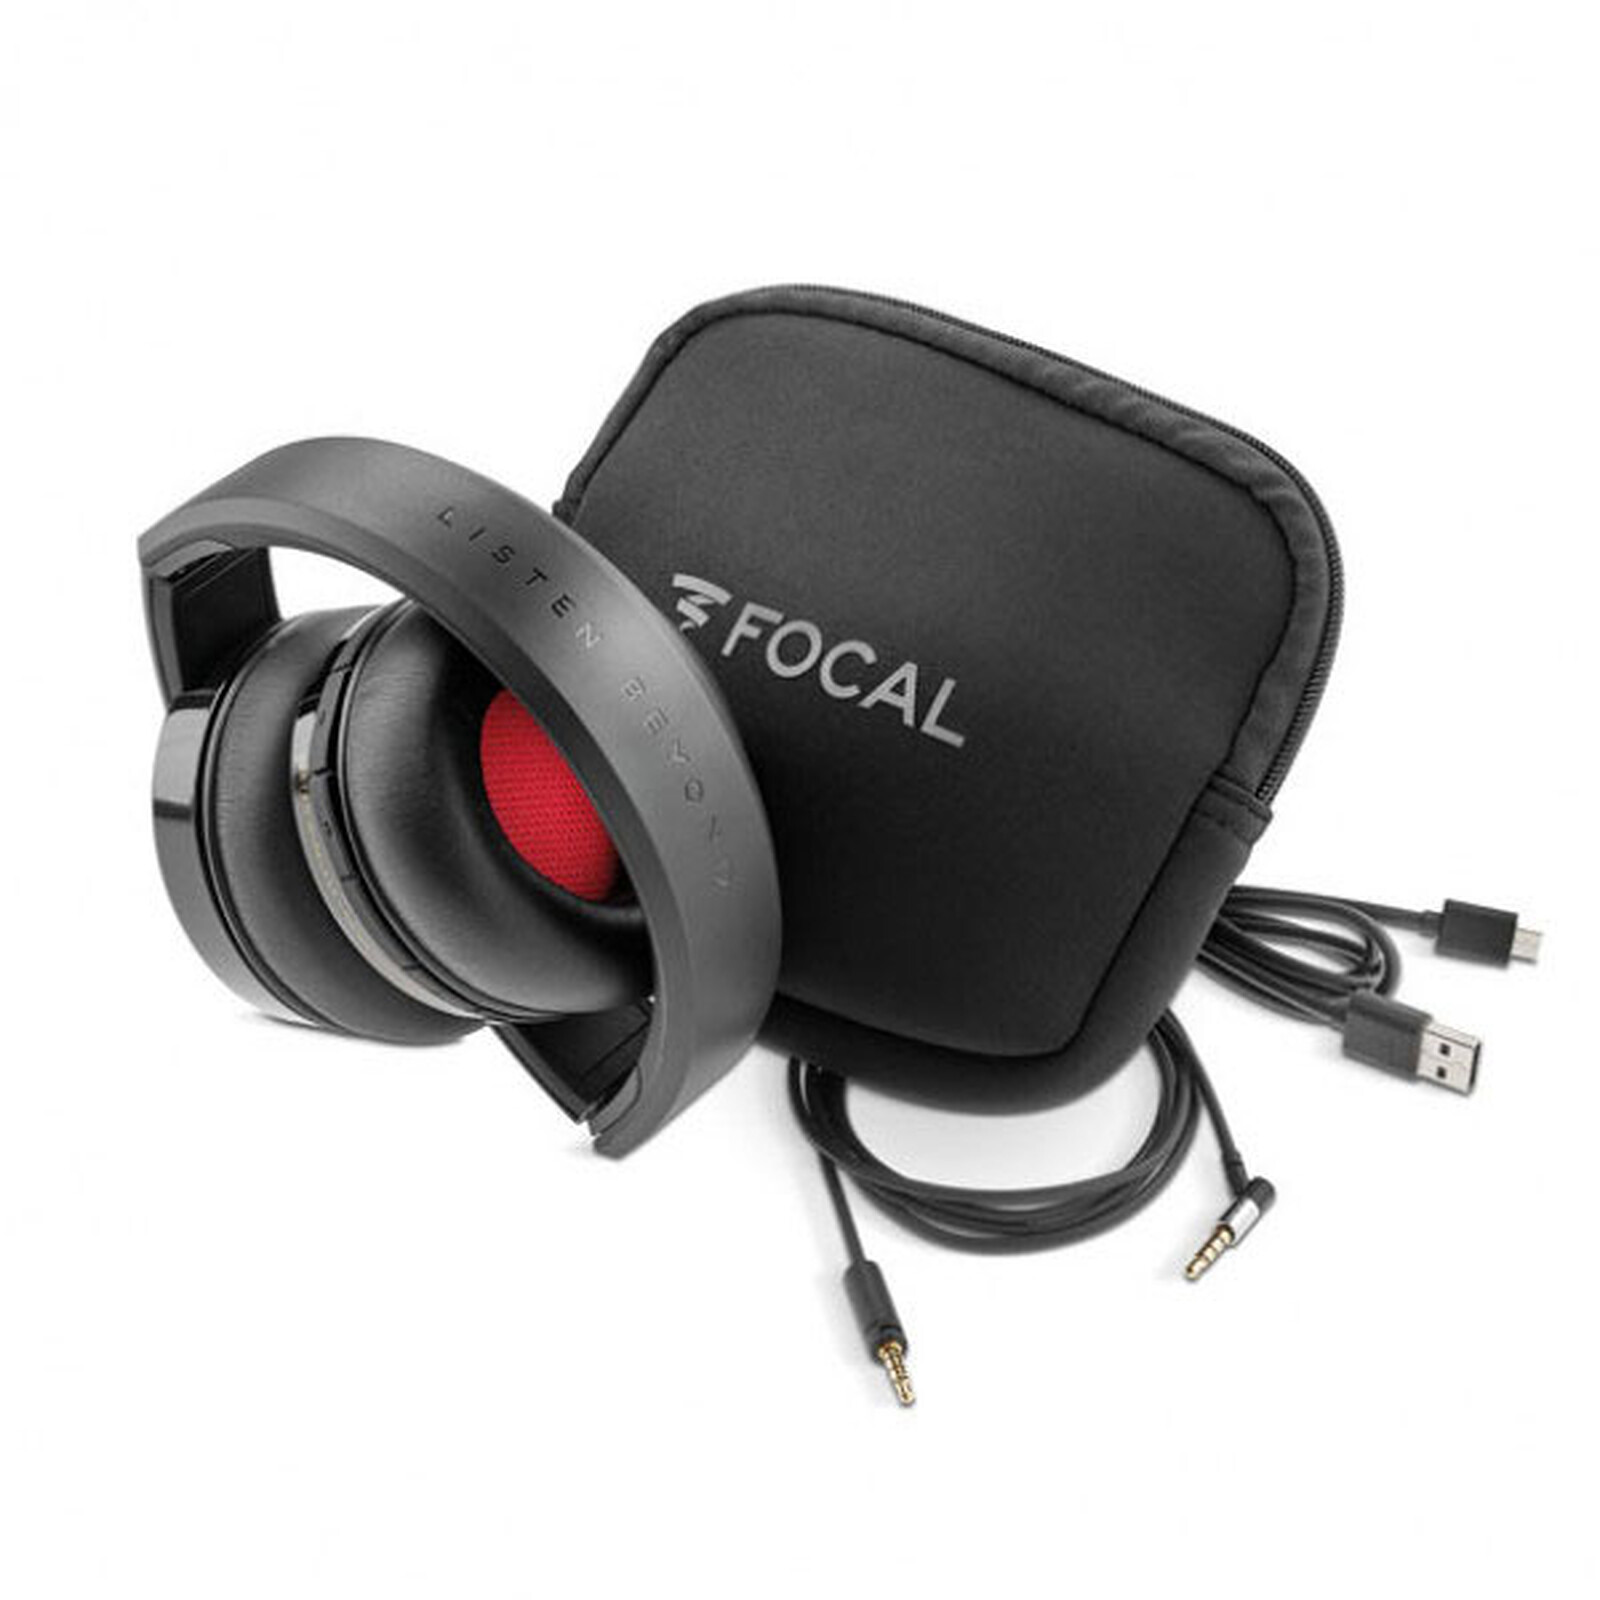 Focal Listen Wireless Black - Headphones - LDLC 3-year warranty